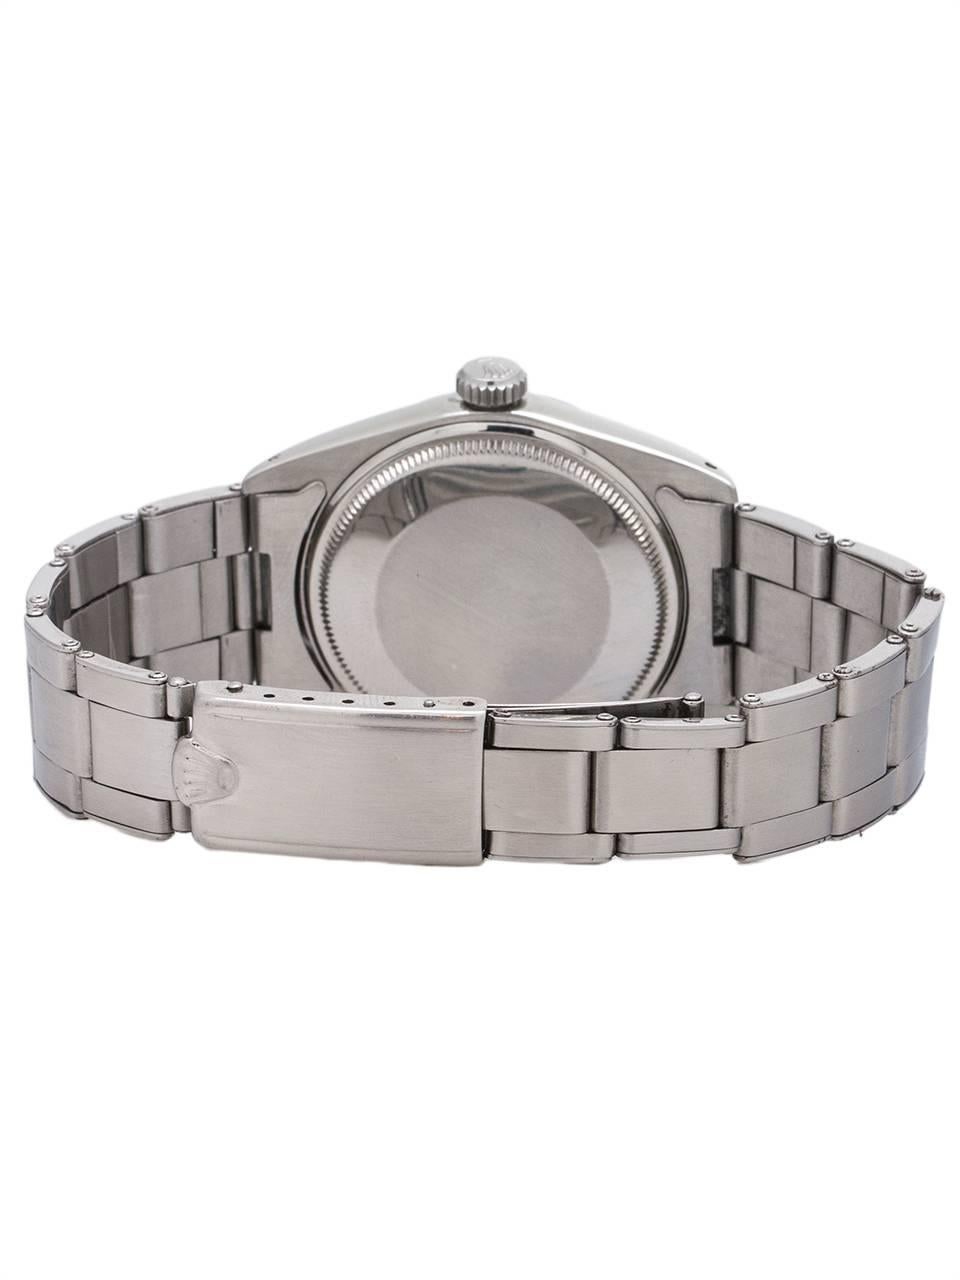 Men's Rolex Stainless Steel Oyster Perpetual Original Dial Date Self Wind Wristwatch